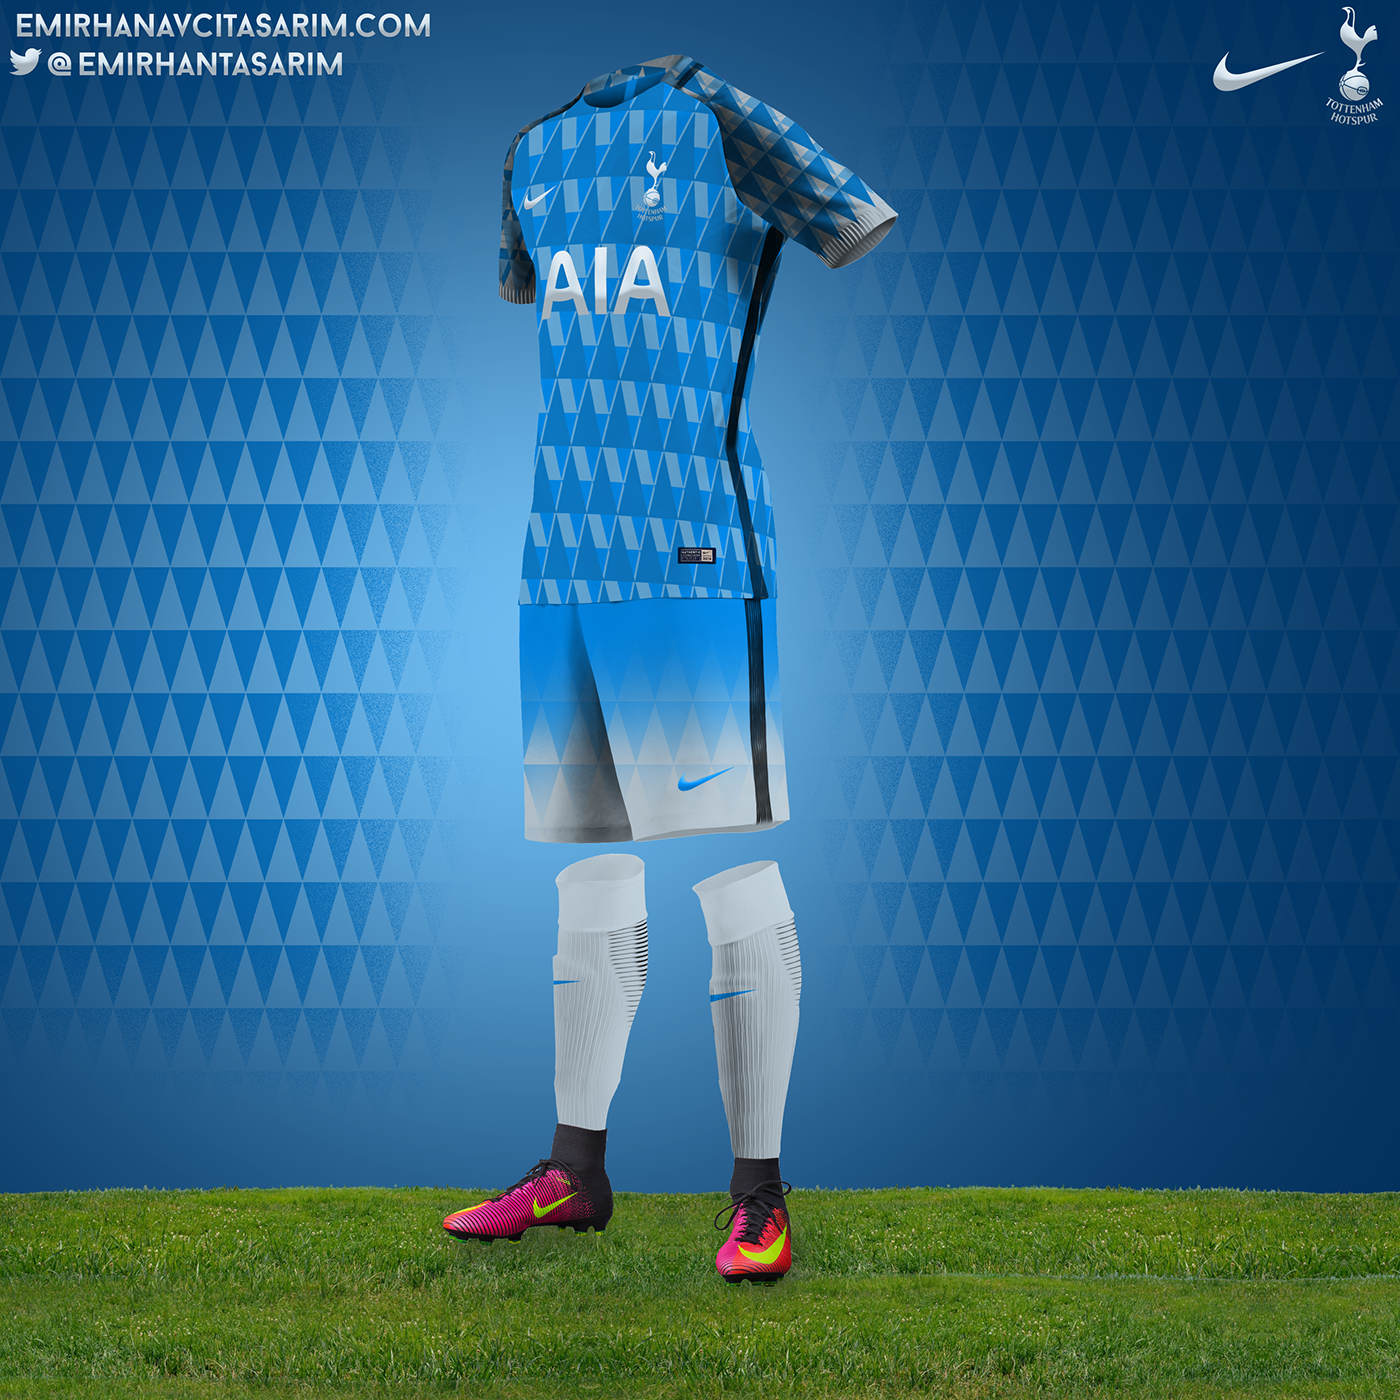 Tottenham Hotspur FC Football Kits Home/Away on Behance